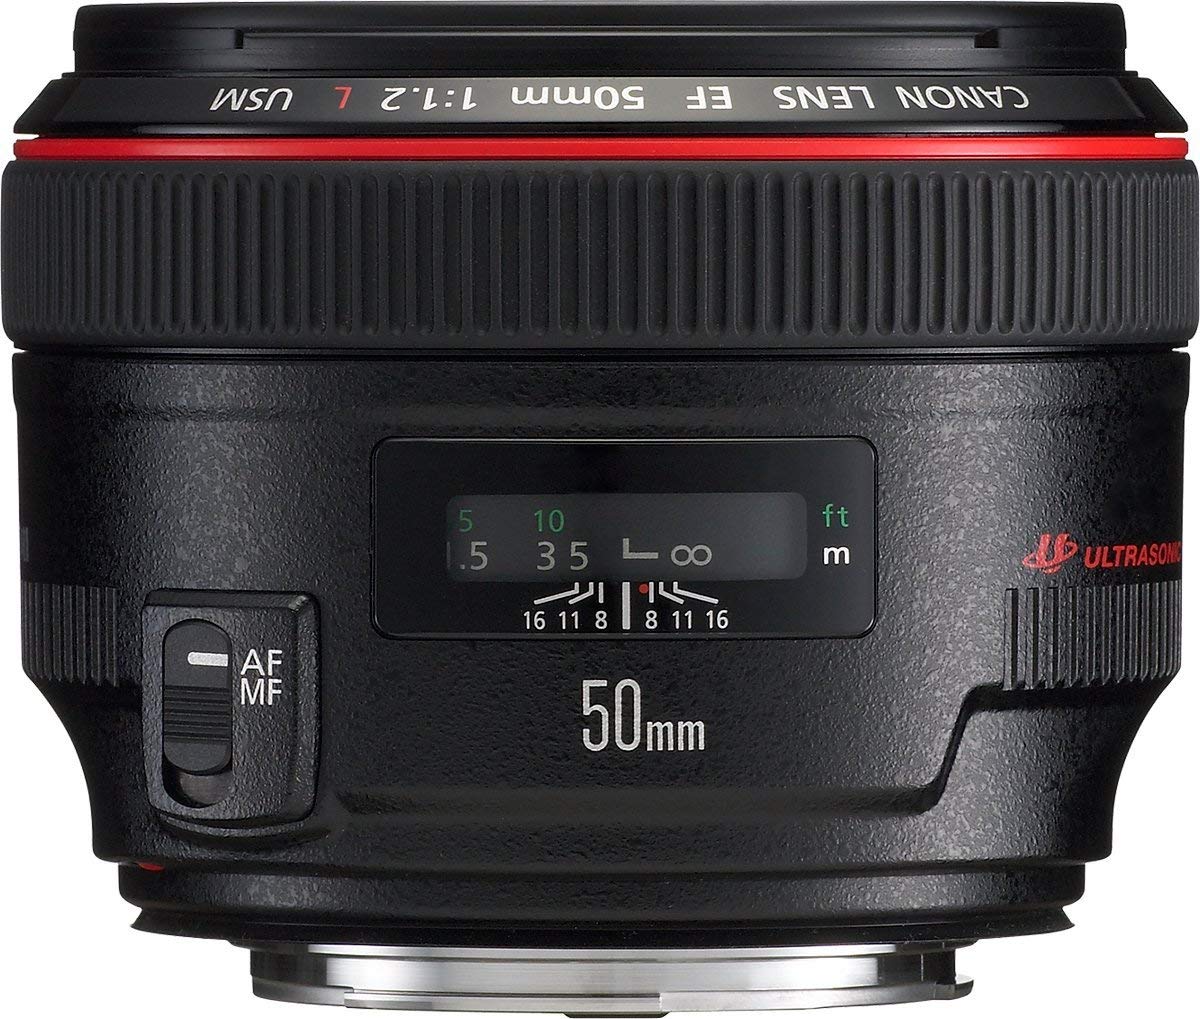 Canon EF 50mm f/1.2 L USM Lens for Canon Digital SLR Cameras - International Model